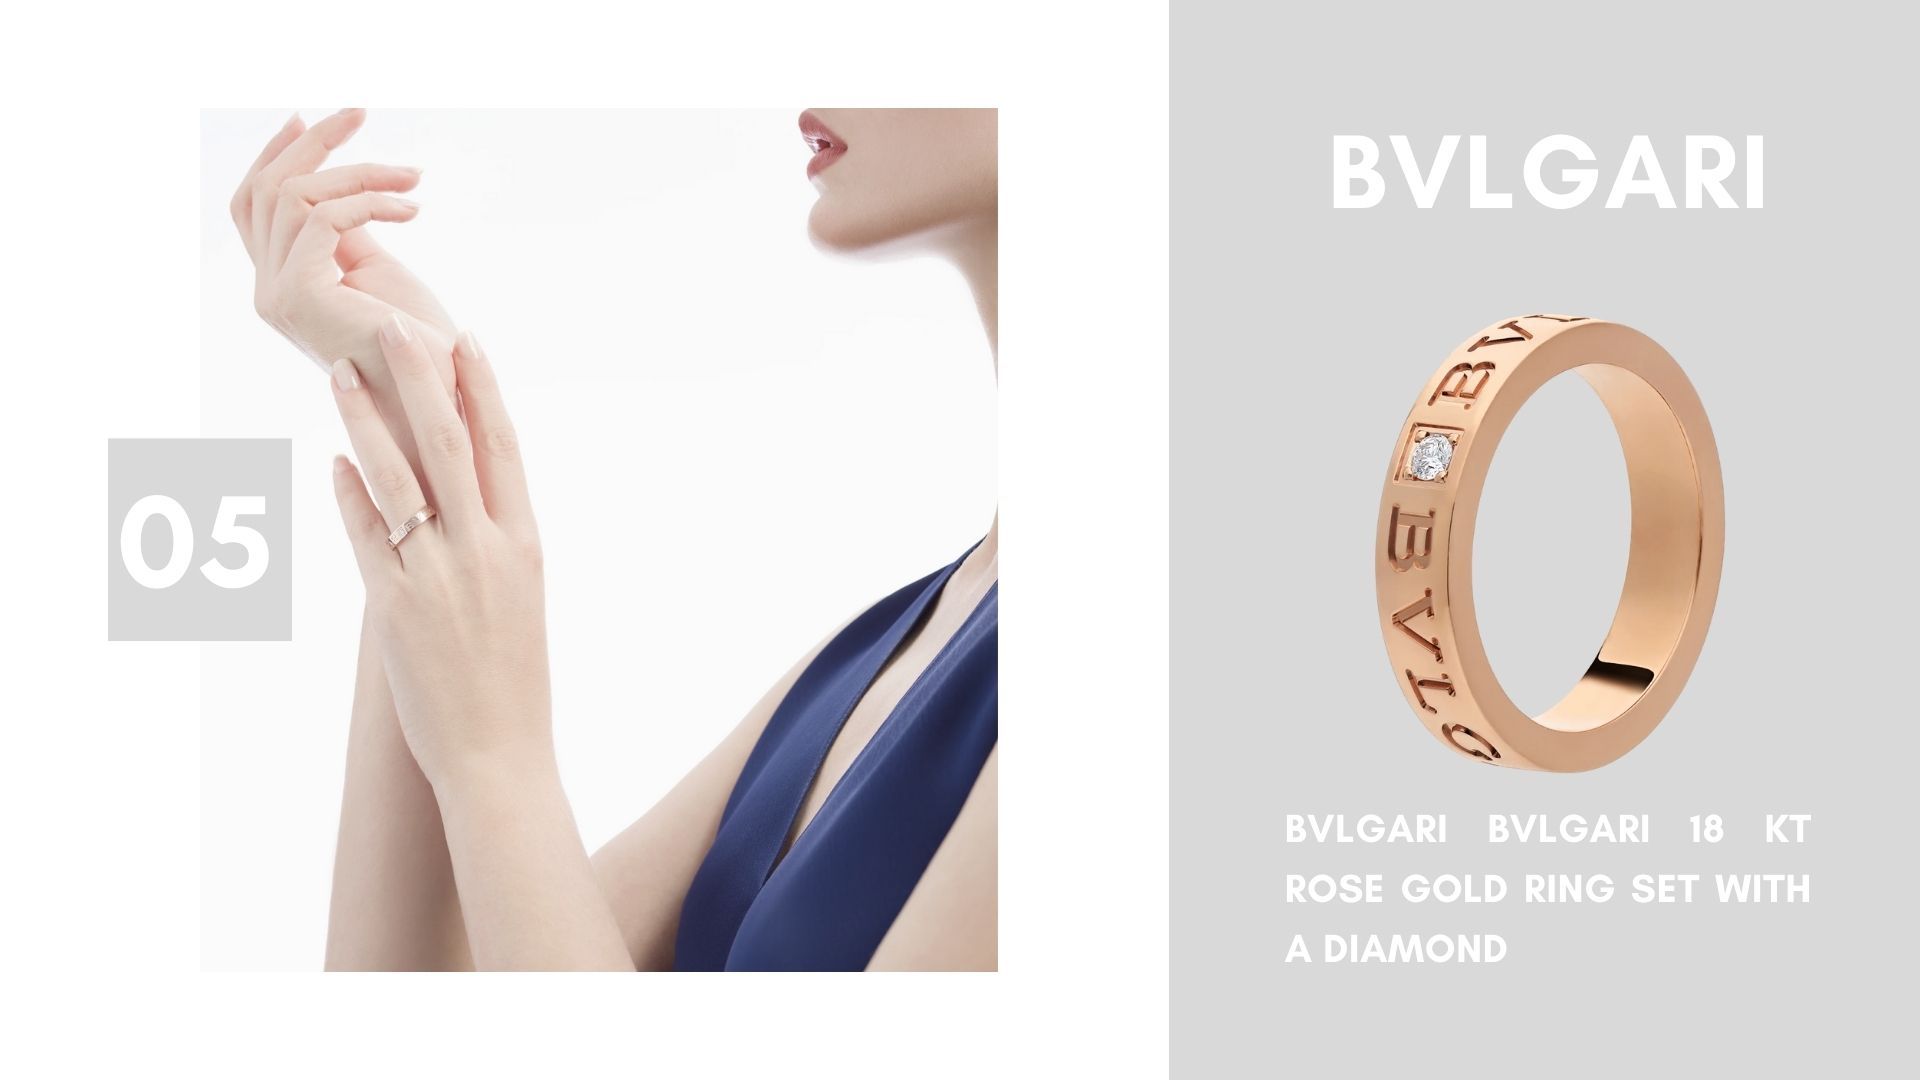 BVLGARI 18 kt rose gold ring set with a diamond รวมแหวน Bvlgari น่าจับตามอง 2020 